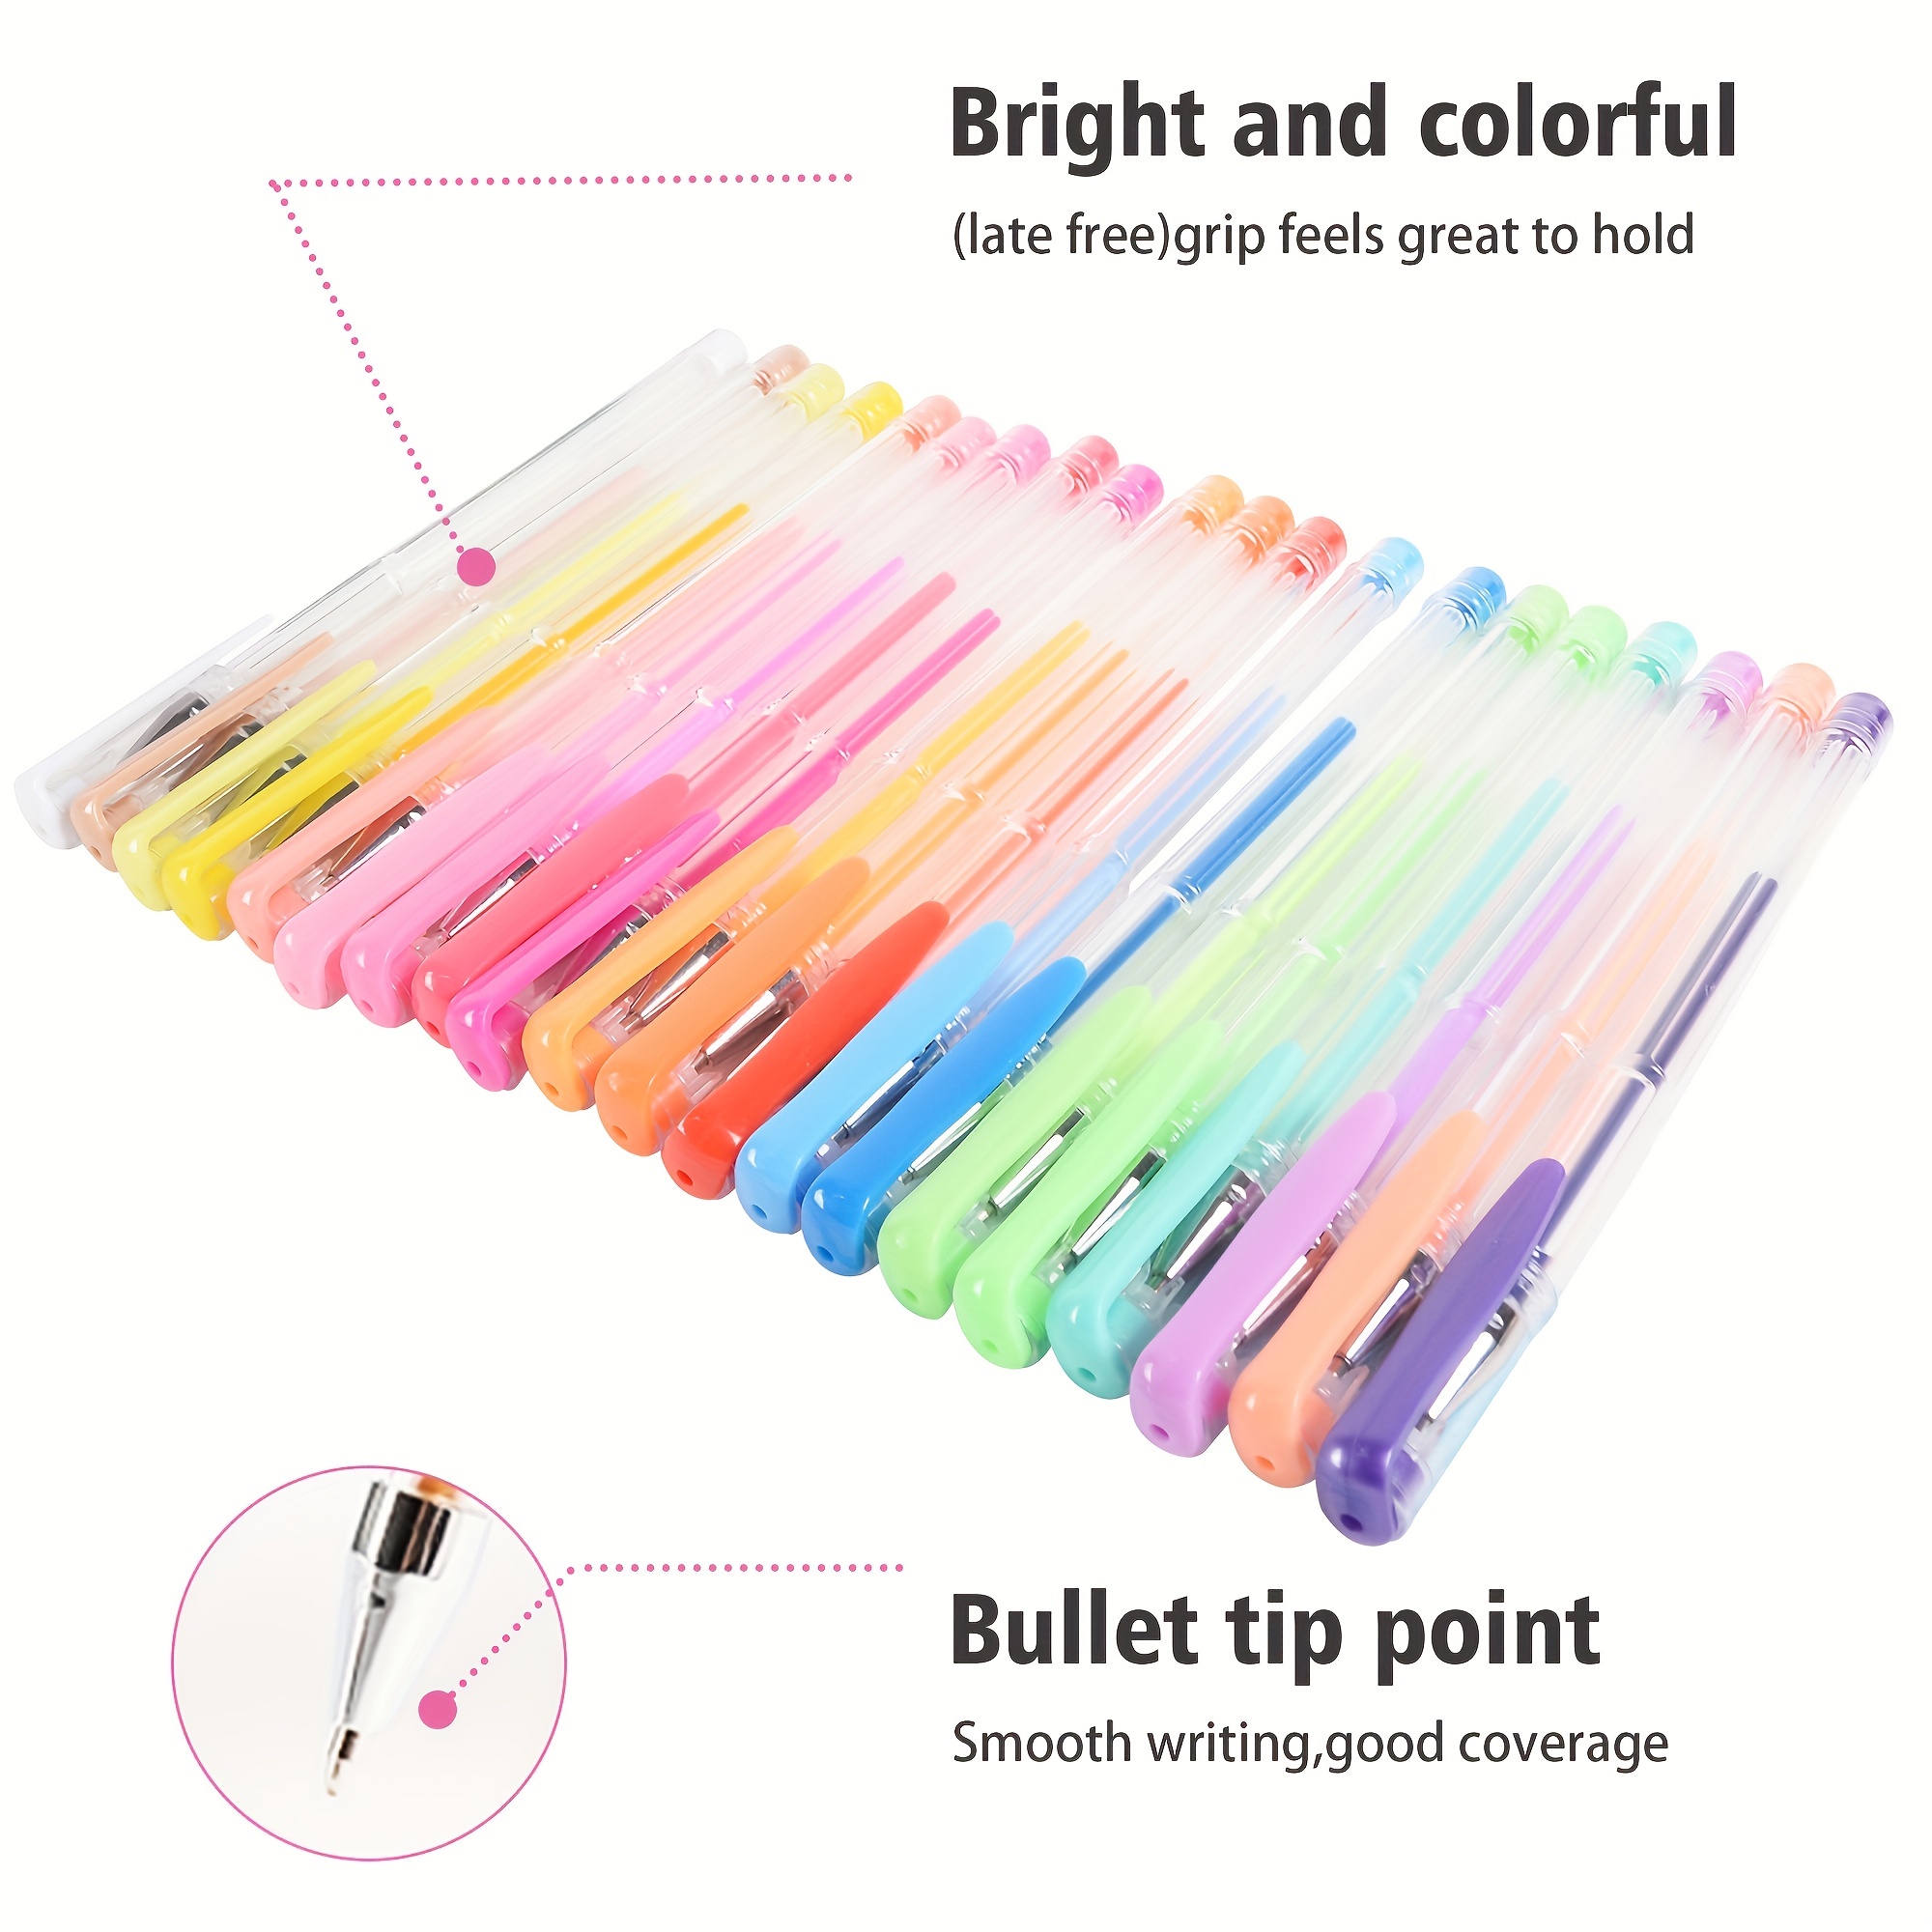 Tanmit - Gel Pens - 120 Pen Set - DIY Color Chart / Swatch Sheet - Digital  Download